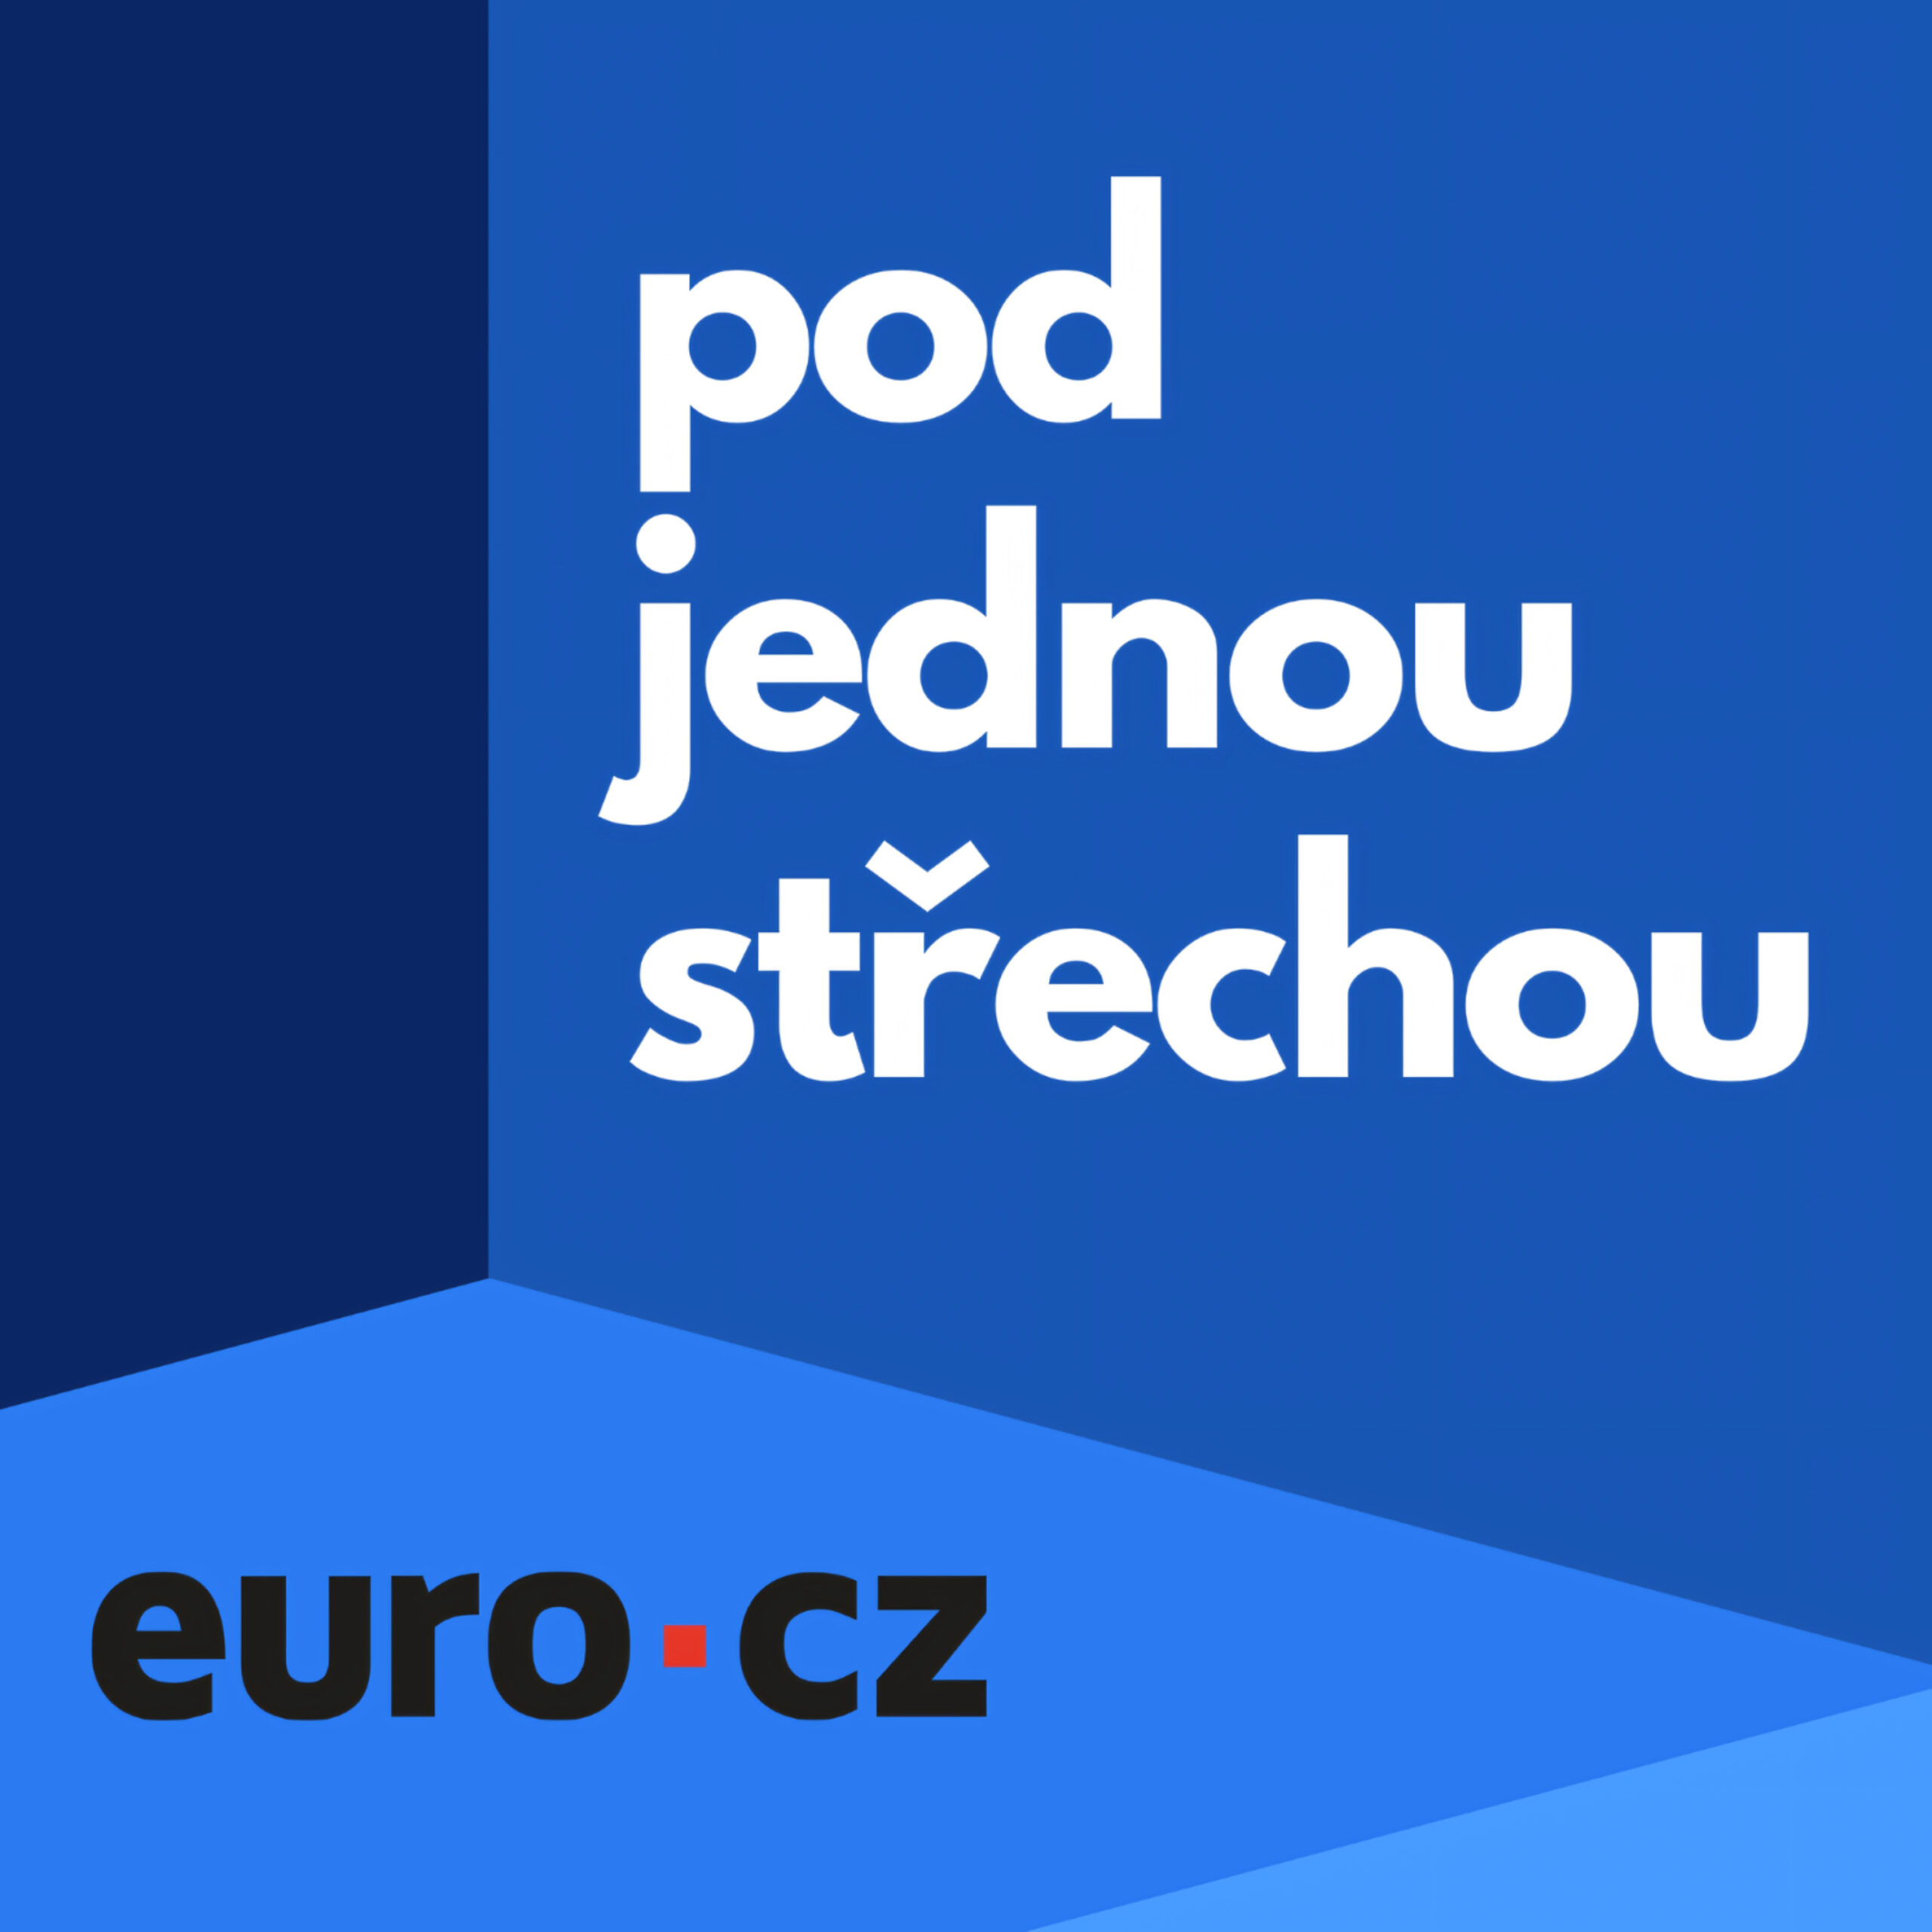 Euro.cz